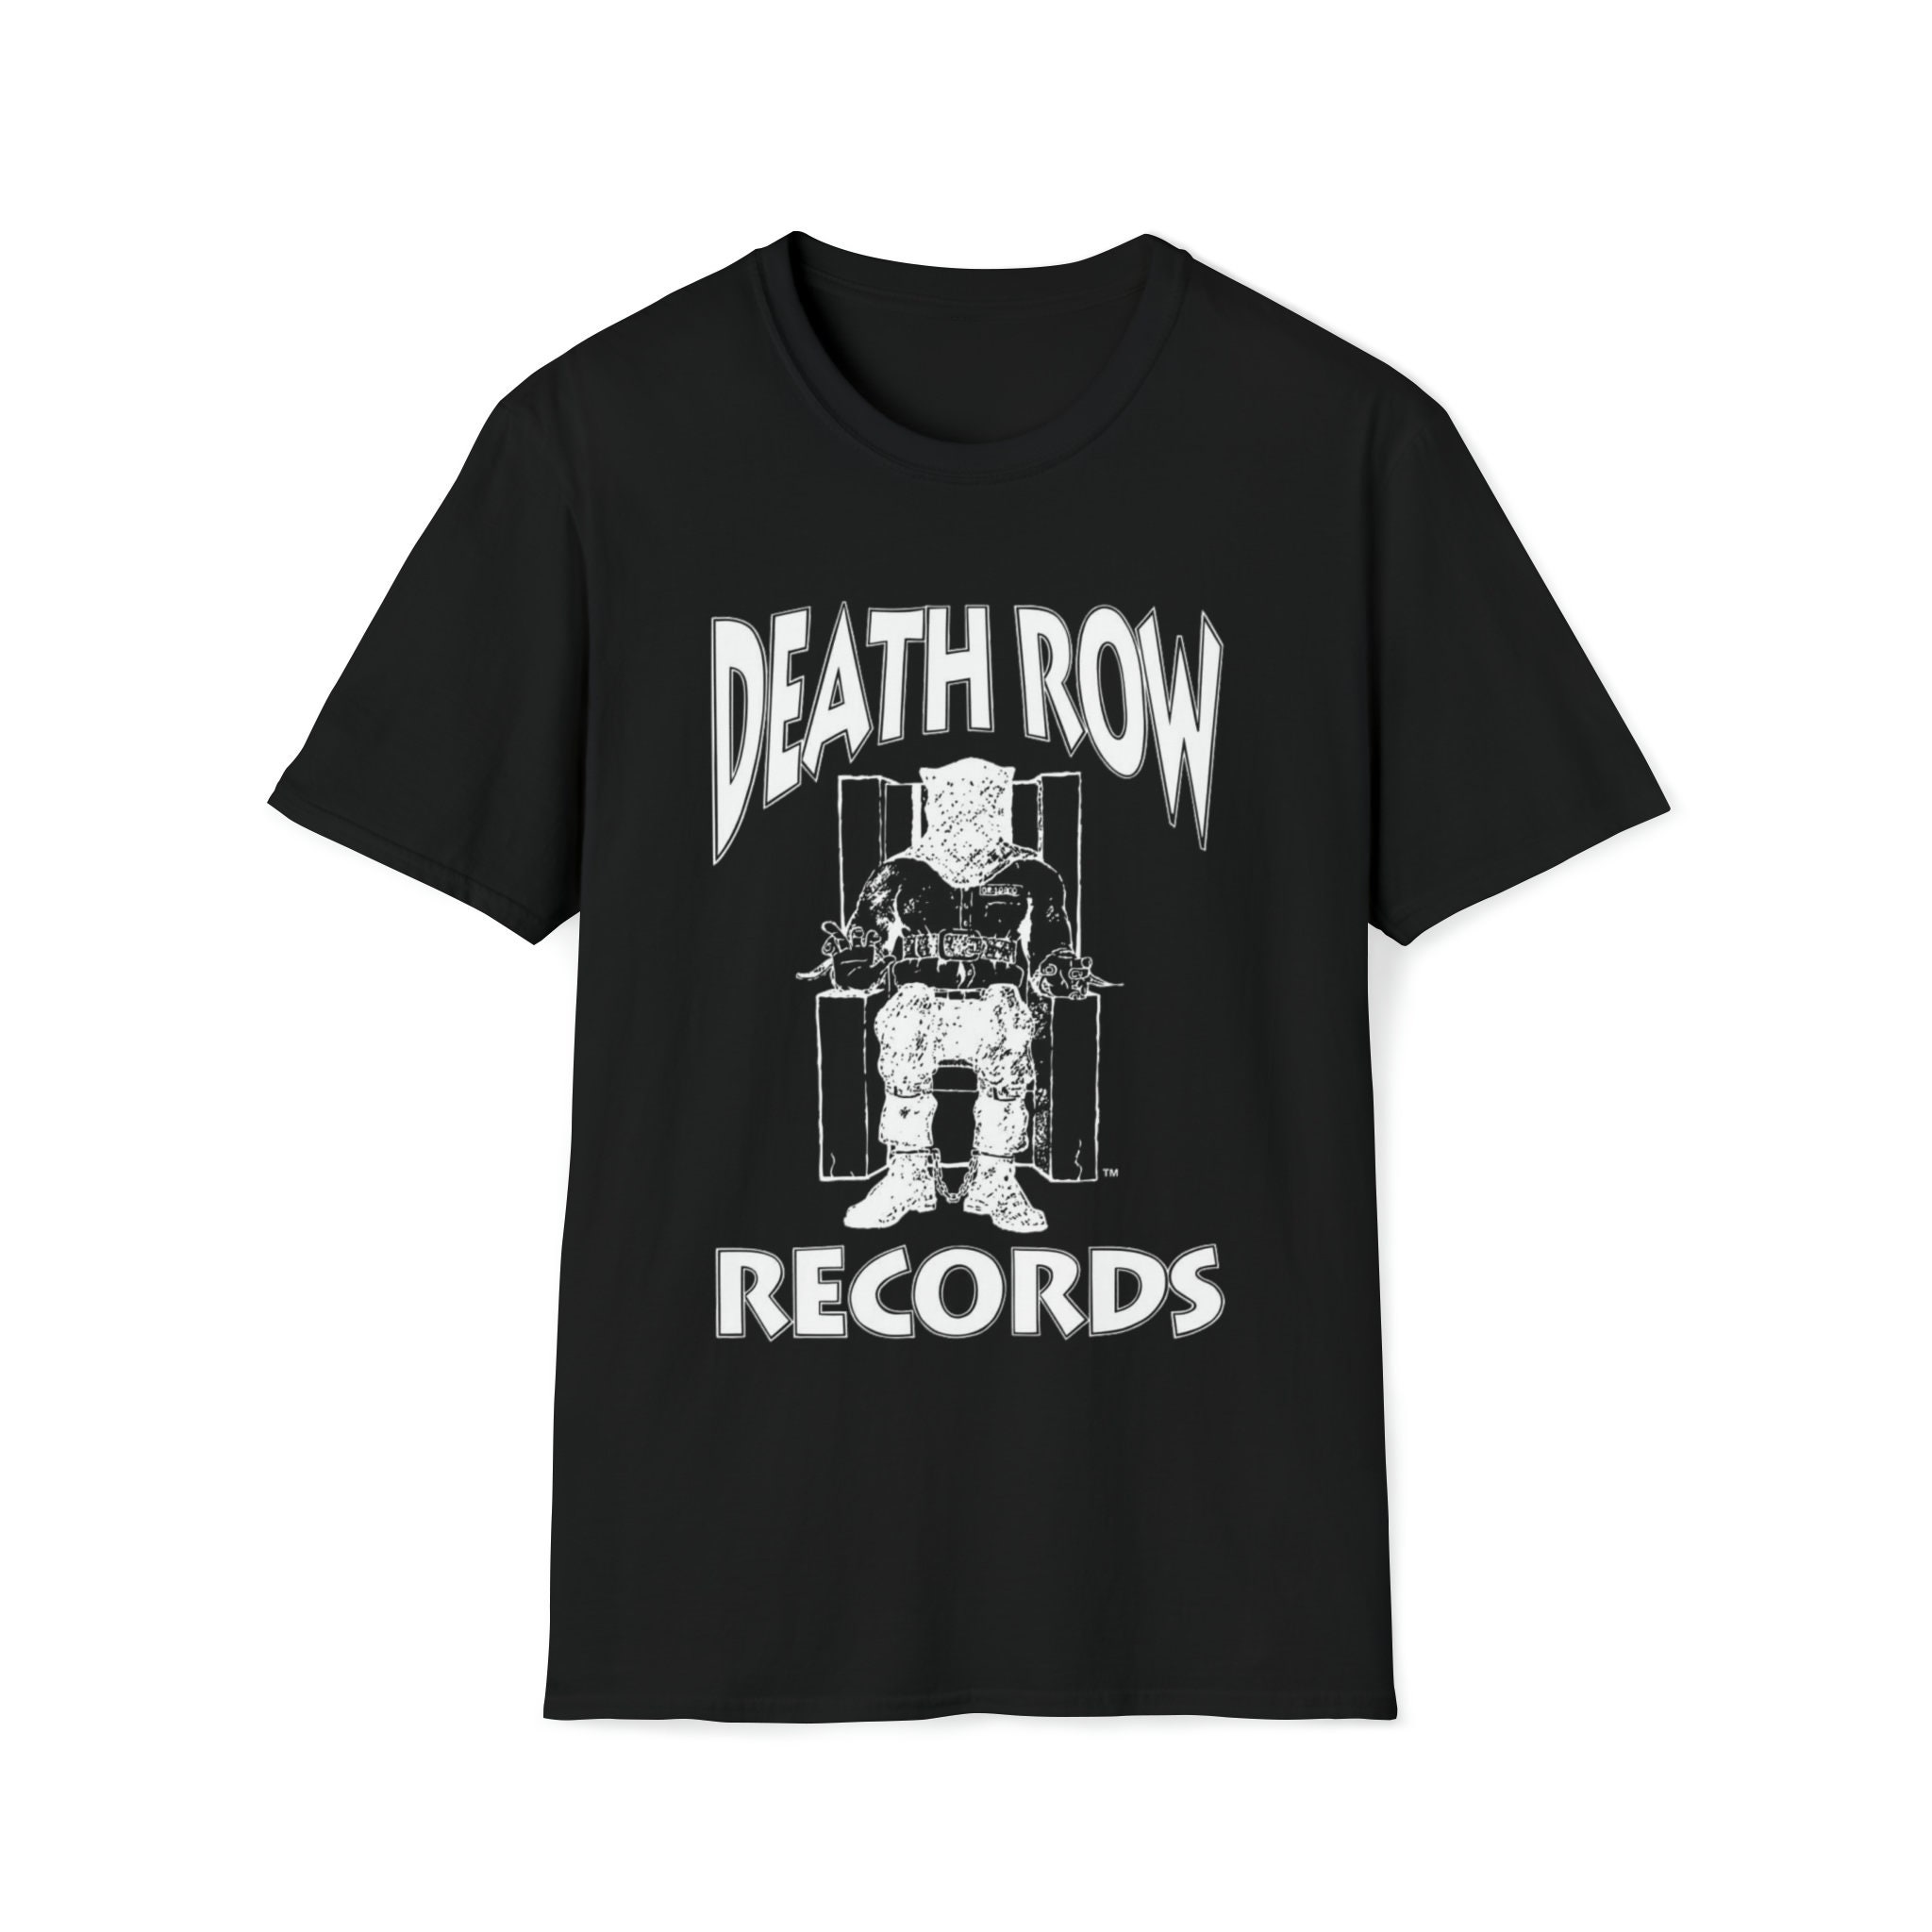 Death row t shirt - Etsy 日本